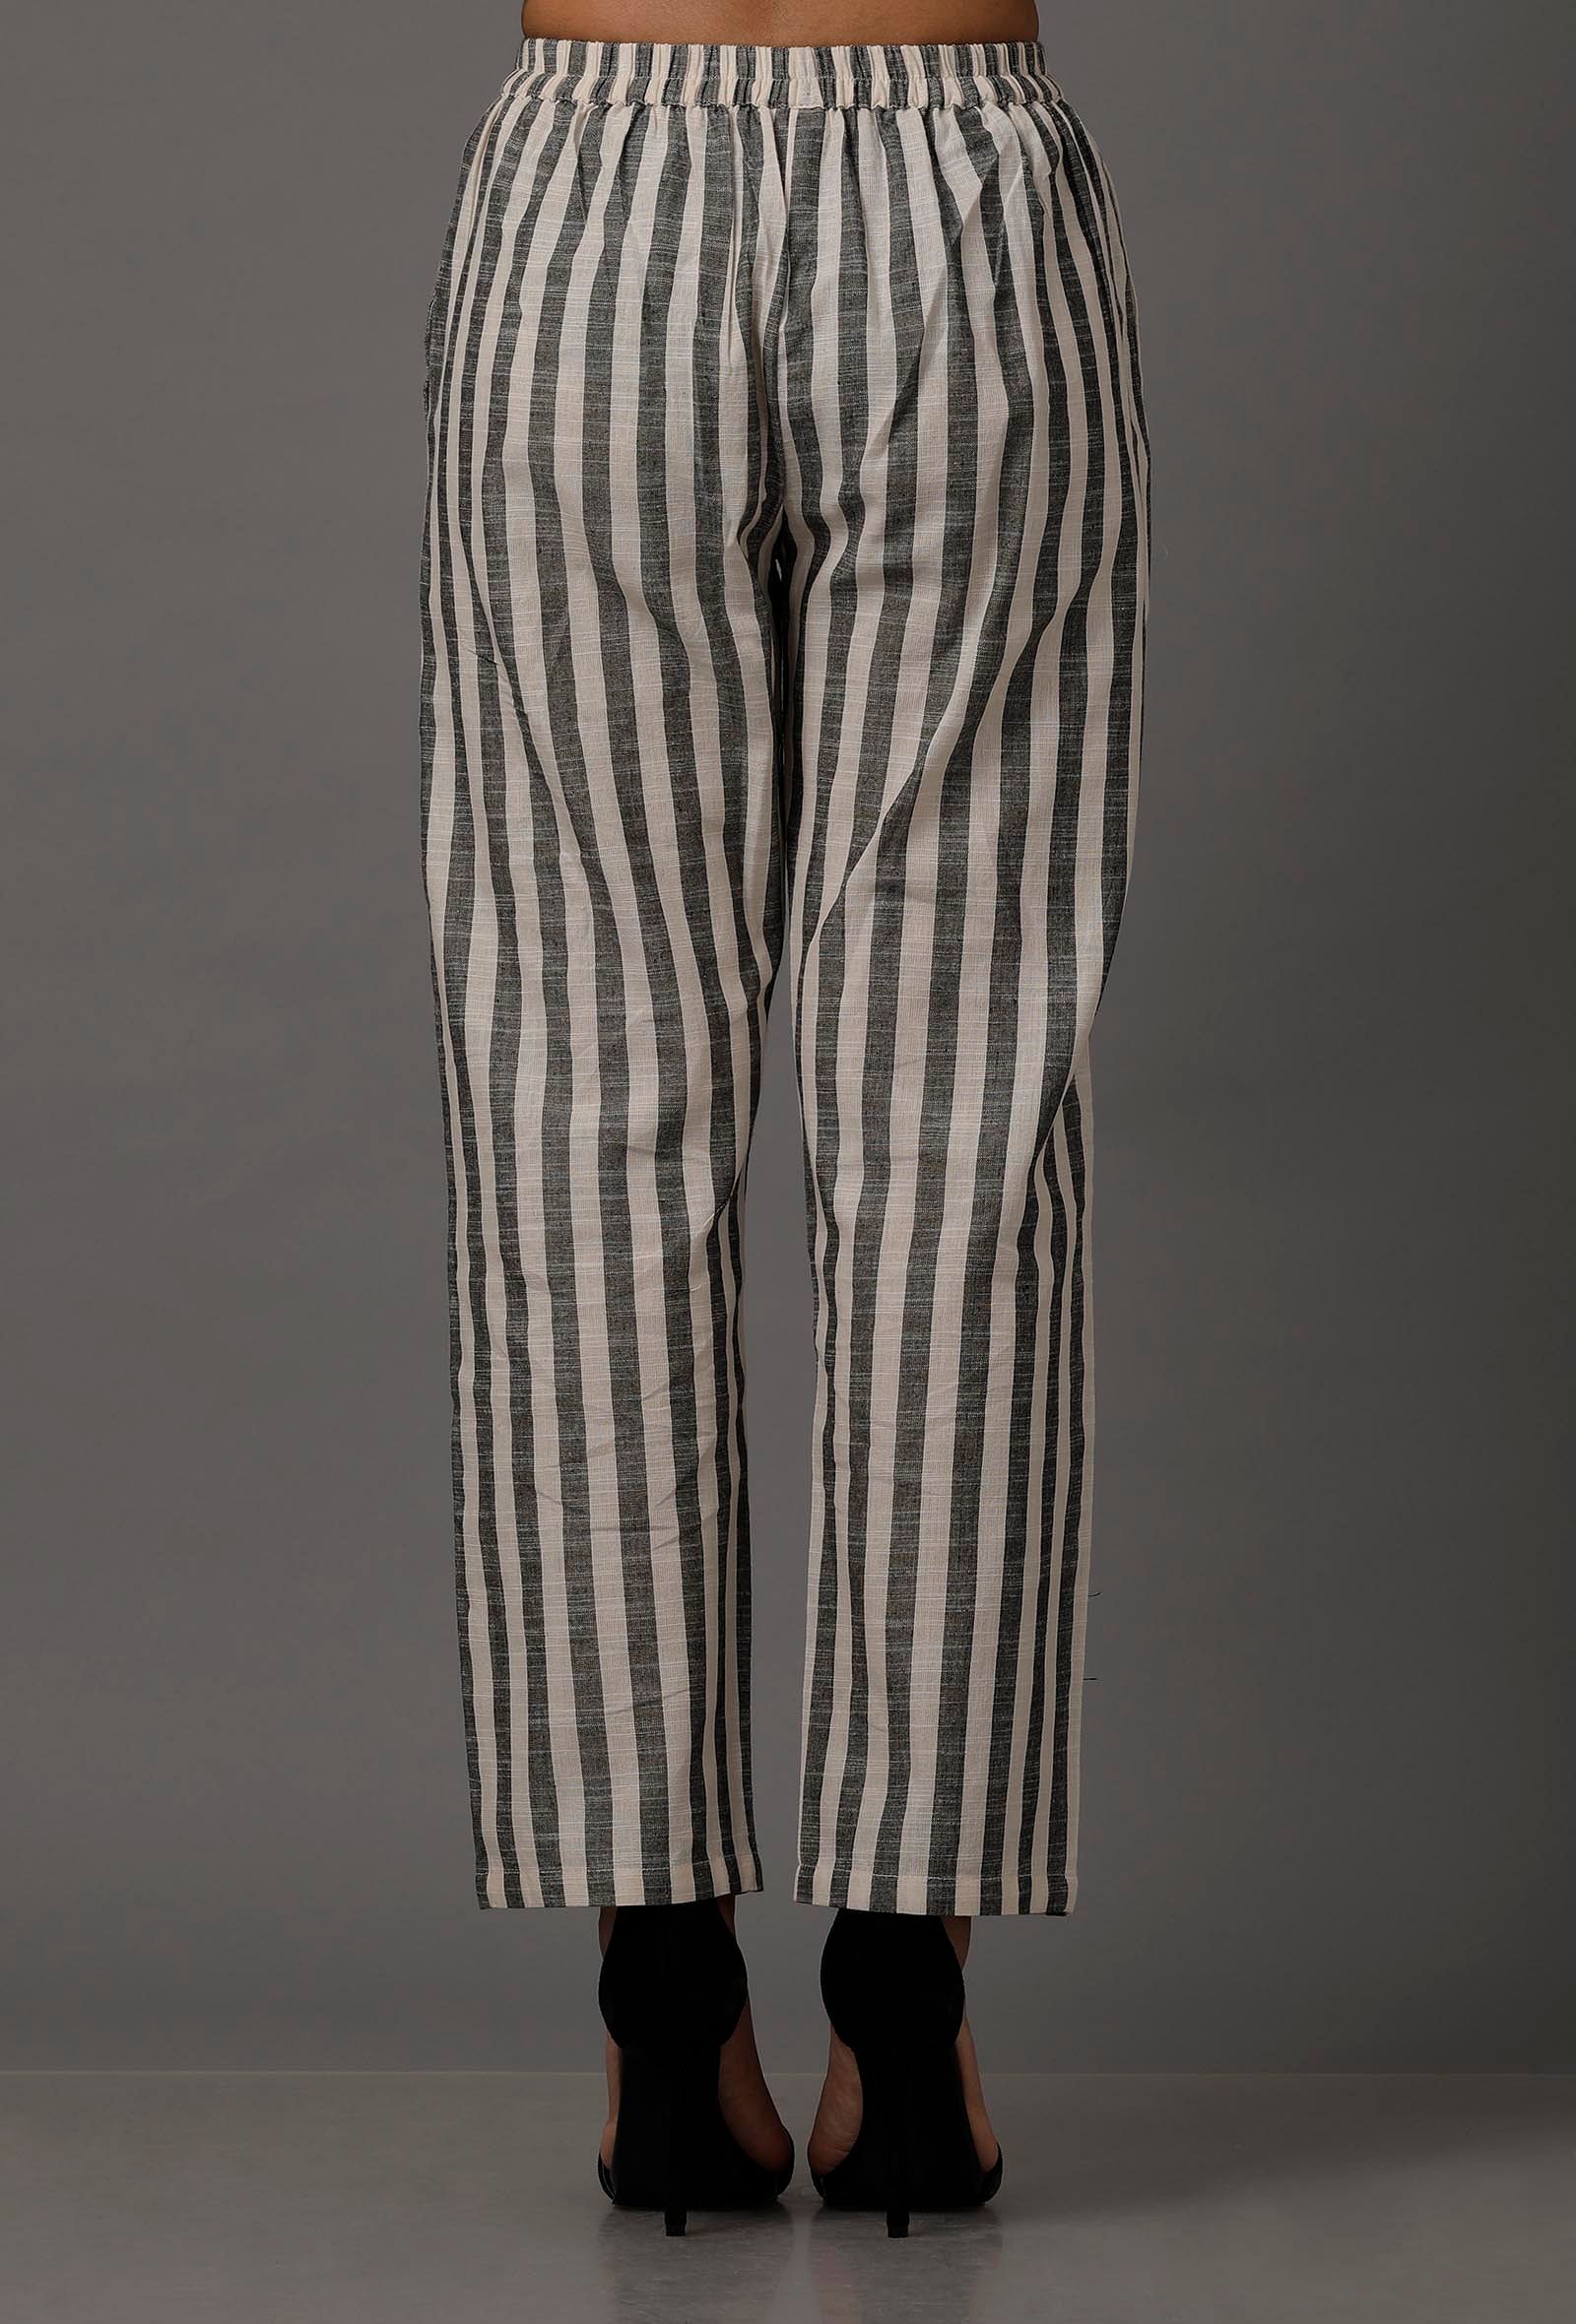 Black and White Stripes Pure Woven Cotton Pants